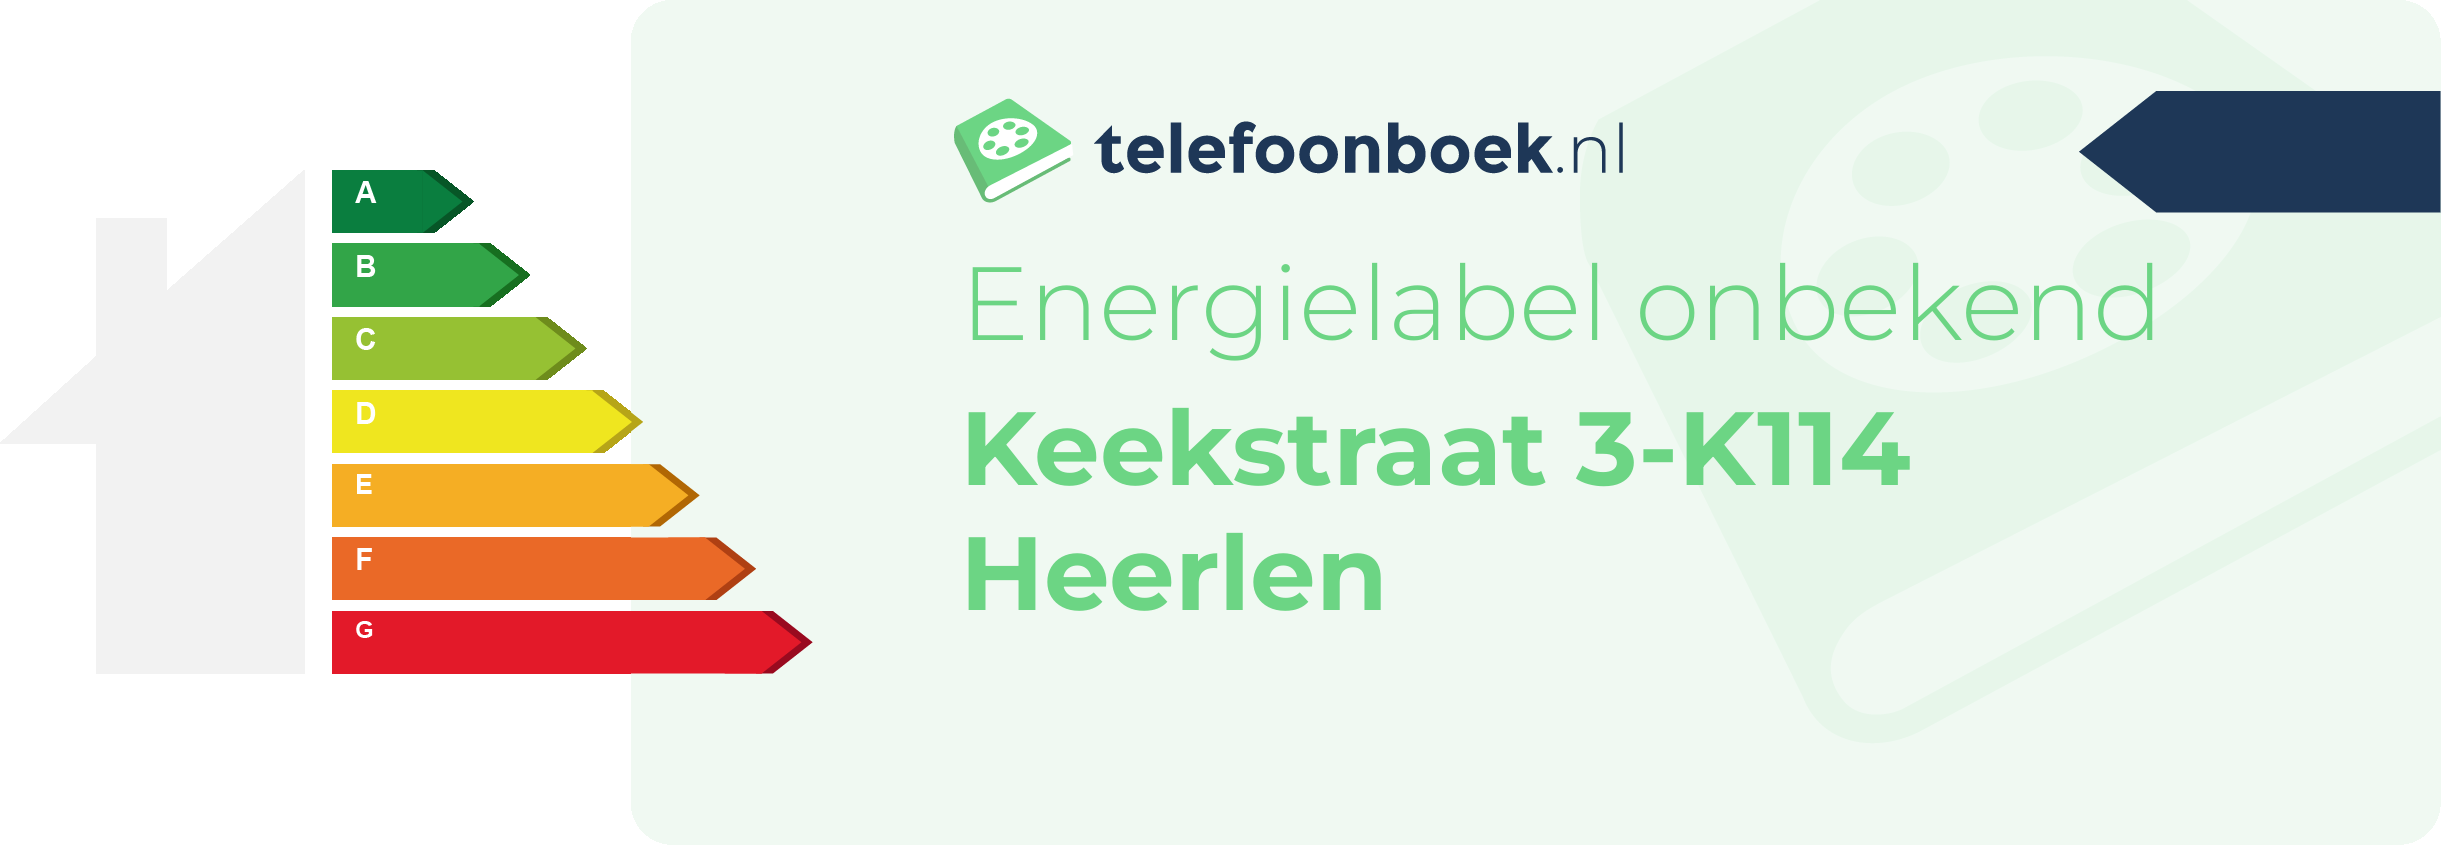 Energielabel Keekstraat 3-K114 Heerlen